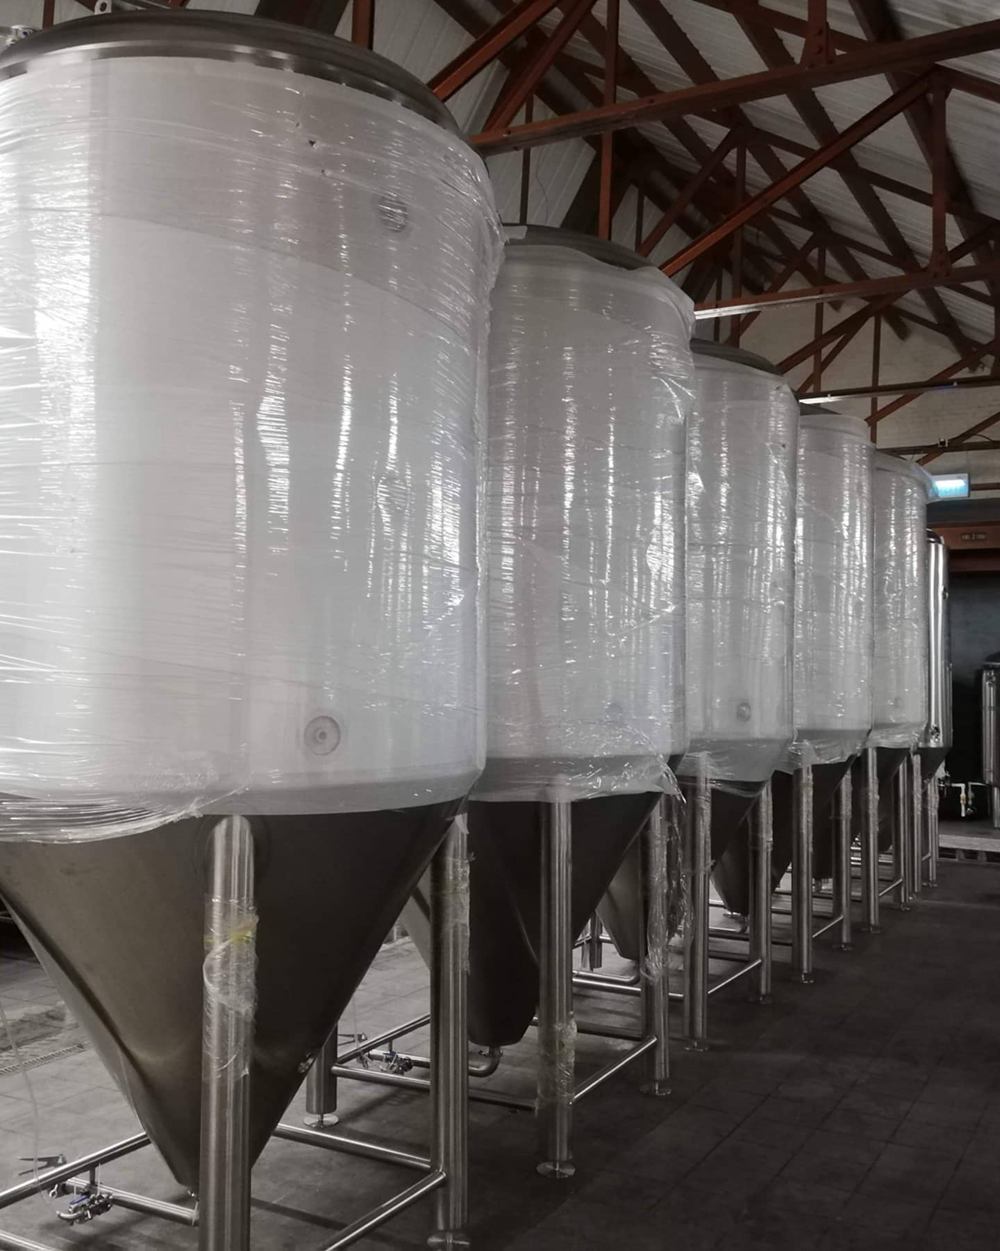 brewery beer brewing equipment fermentation tank fermenter bright tank